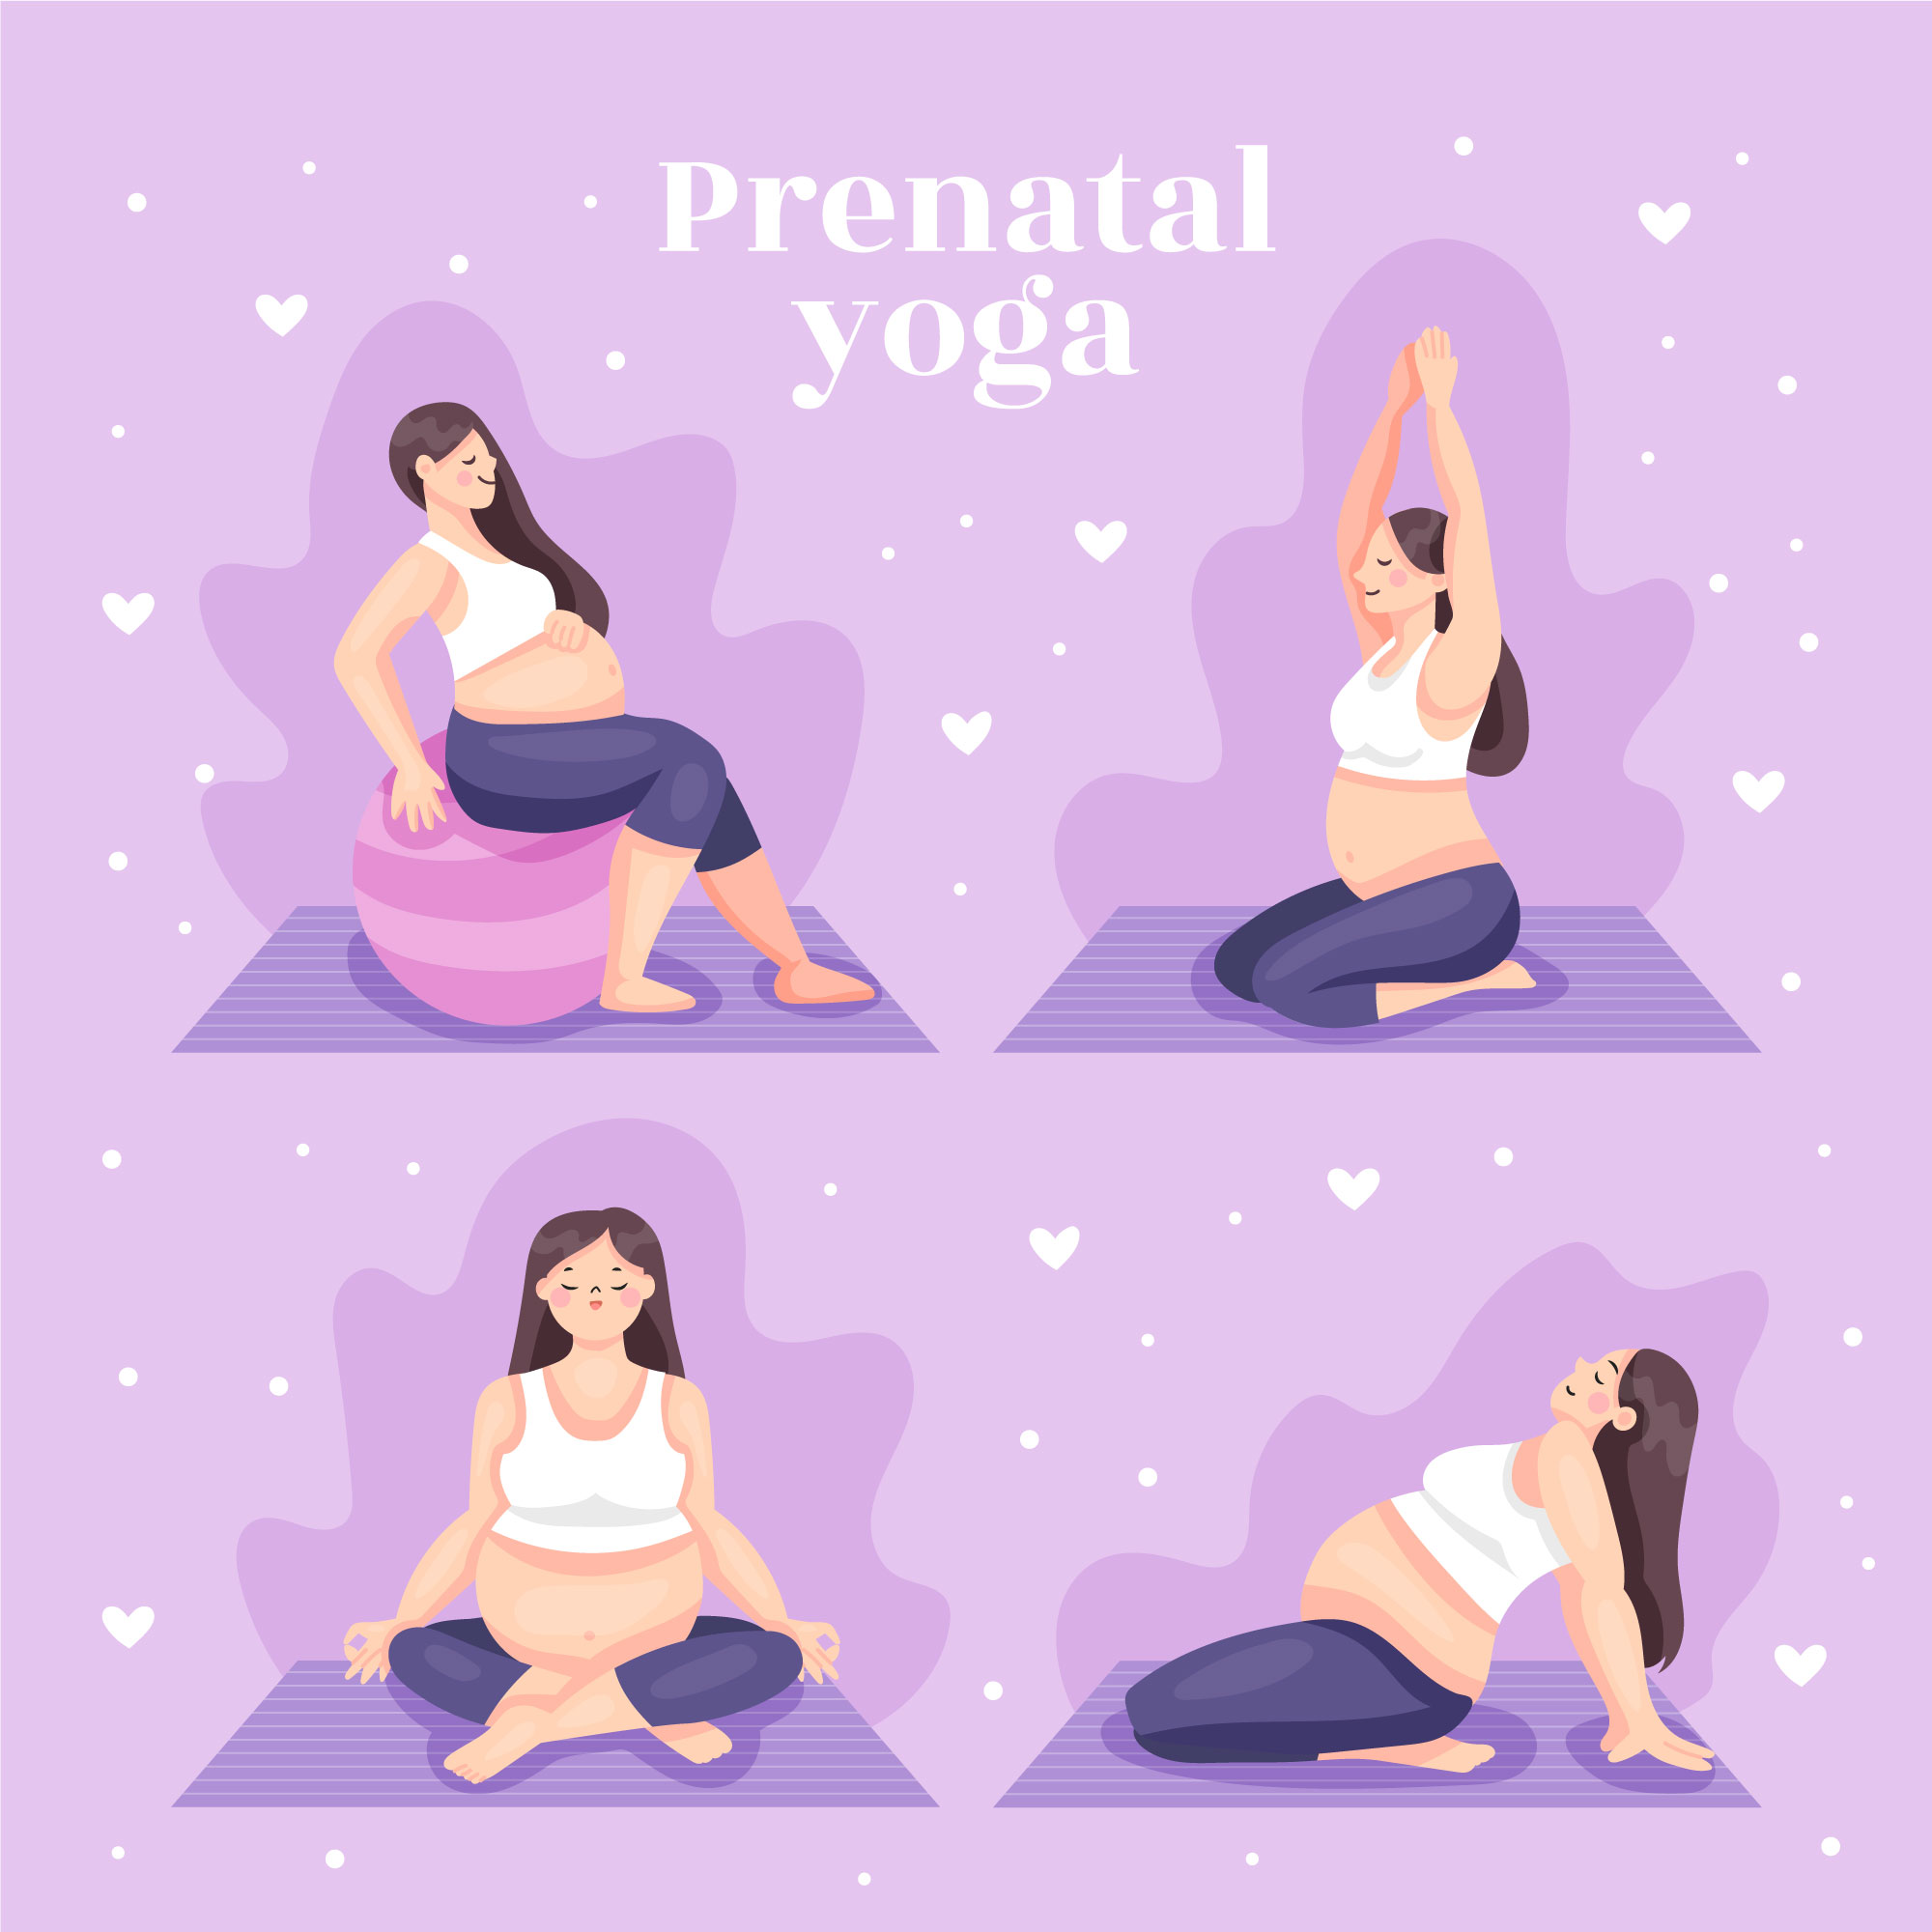 Pregnancy Yoga for Third Trimester: Exercises, Videos, Classes